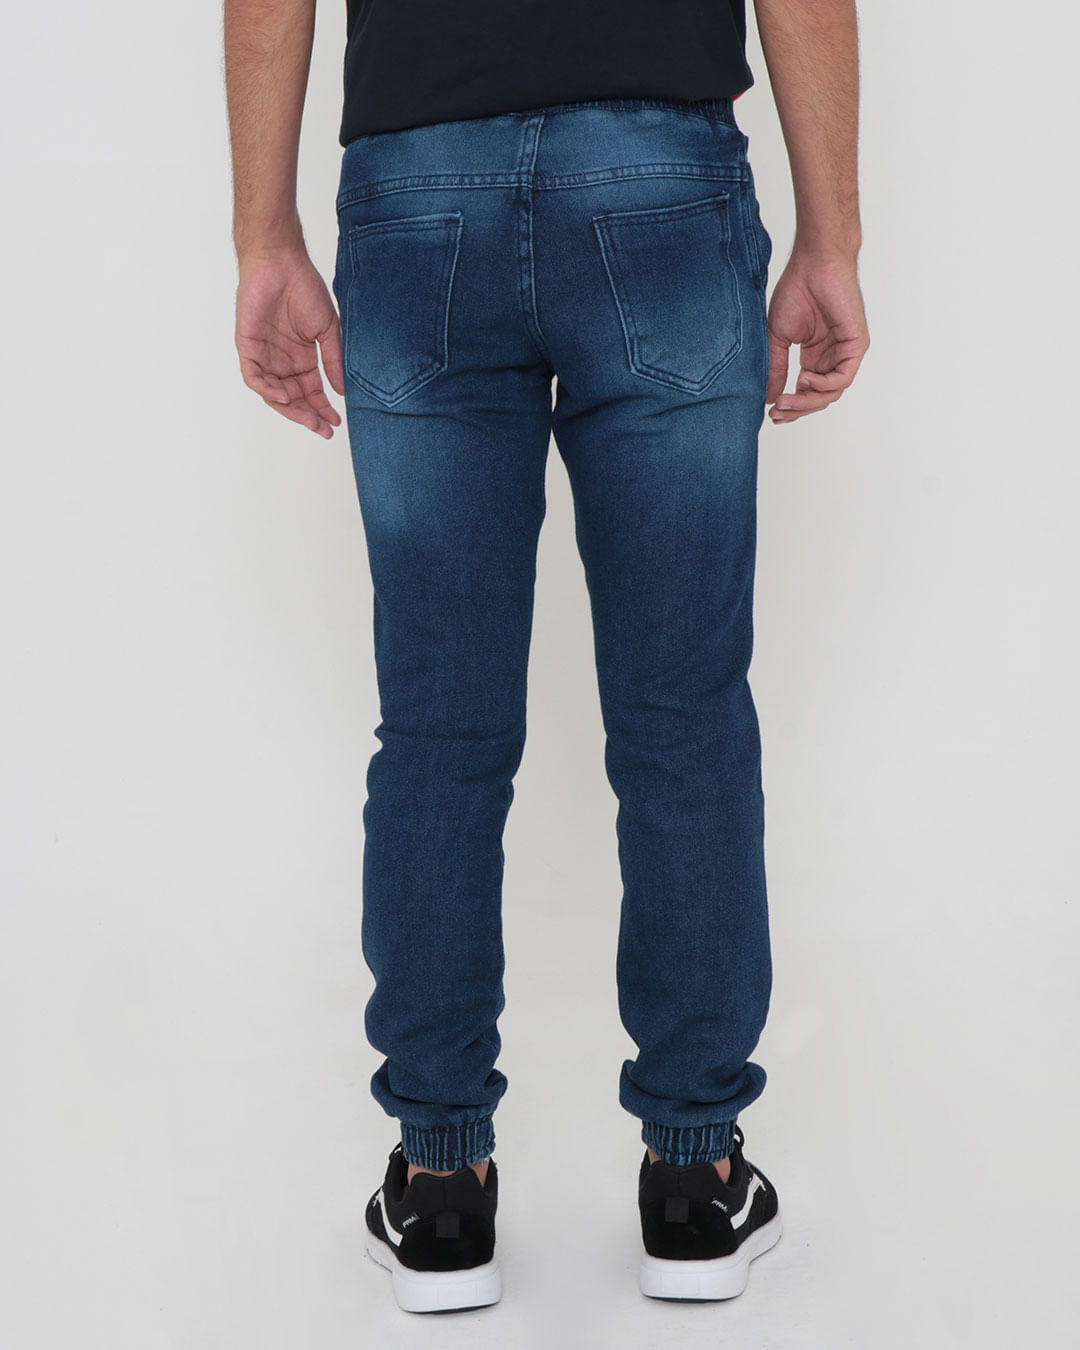 39821000152045-blue-jeans-medio-3